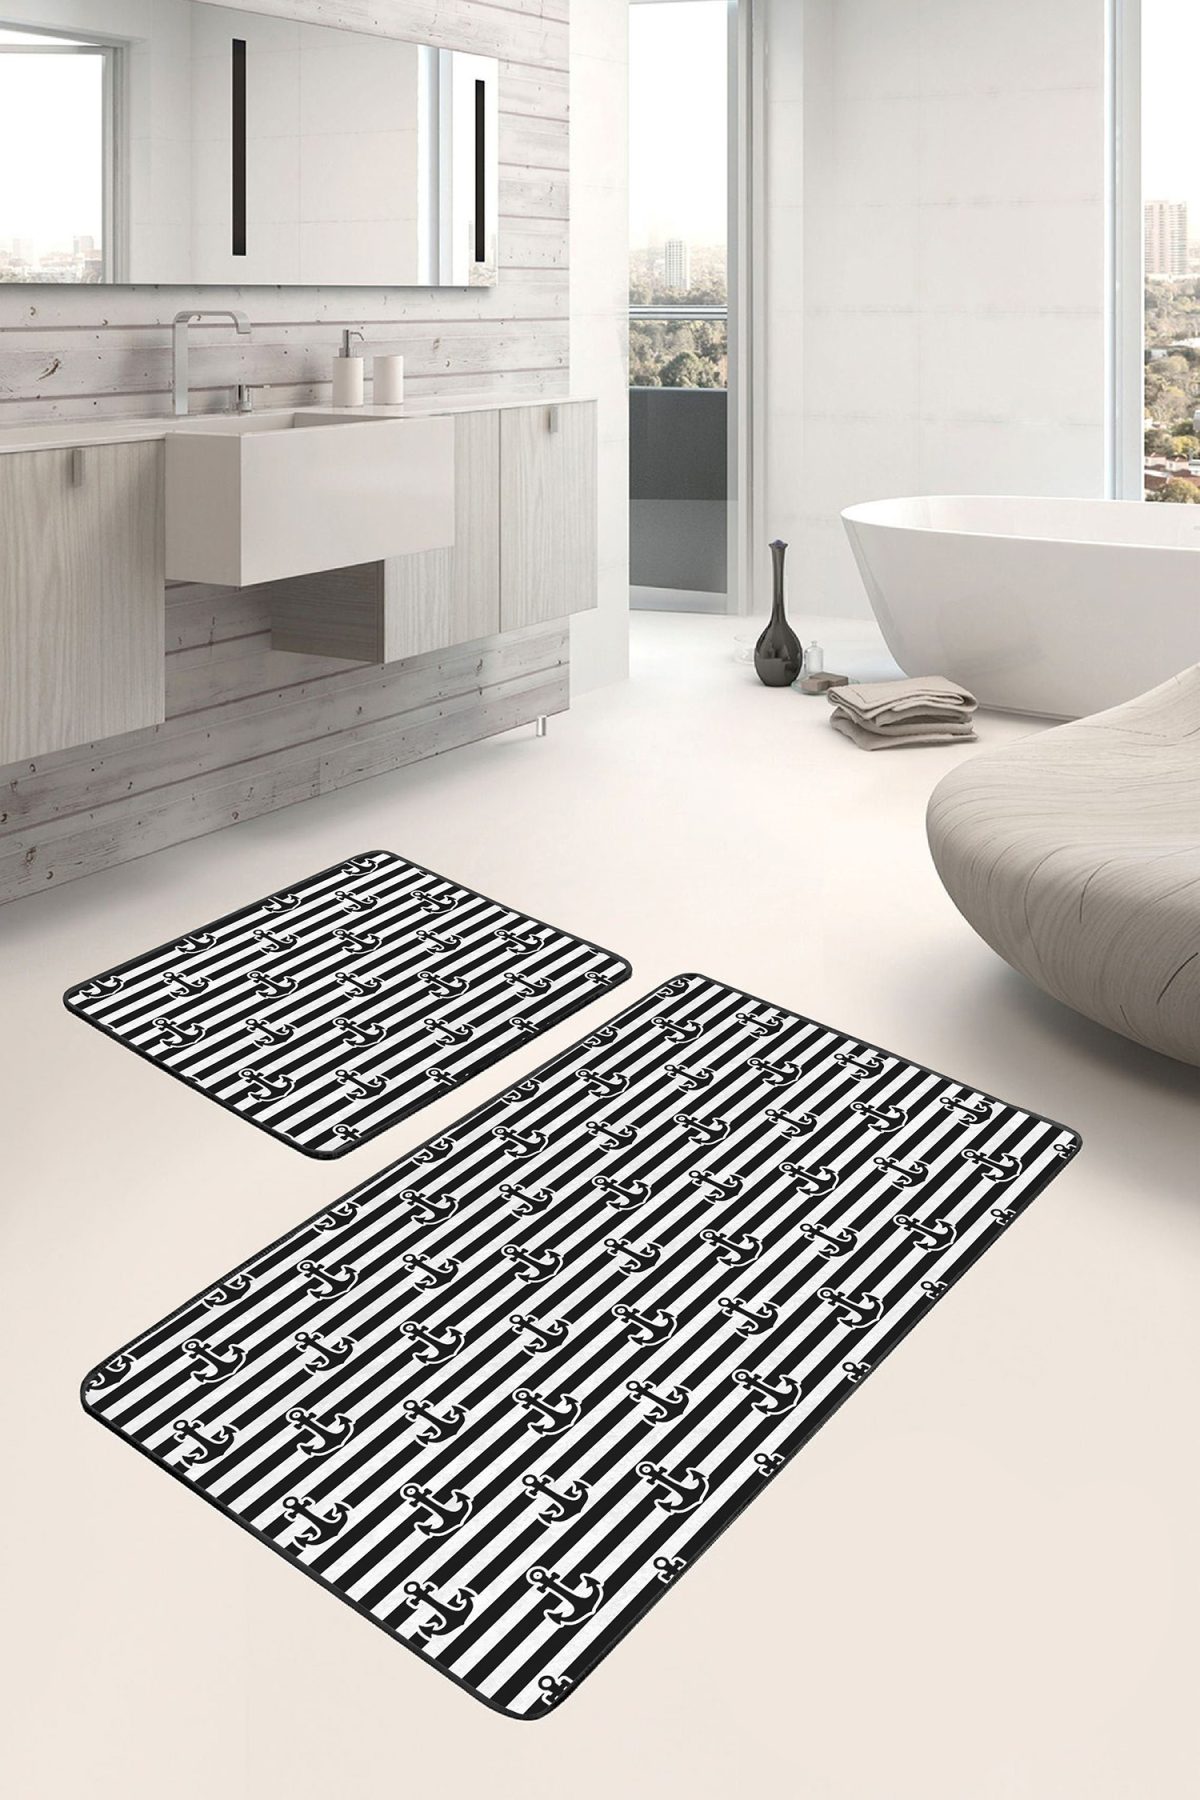 Siyah Beyaz Çizgili Çapa Tasarımlı 2'li Kaymaz Tabanlı Banyo & Mutfak Paspas Takımı Realhomes